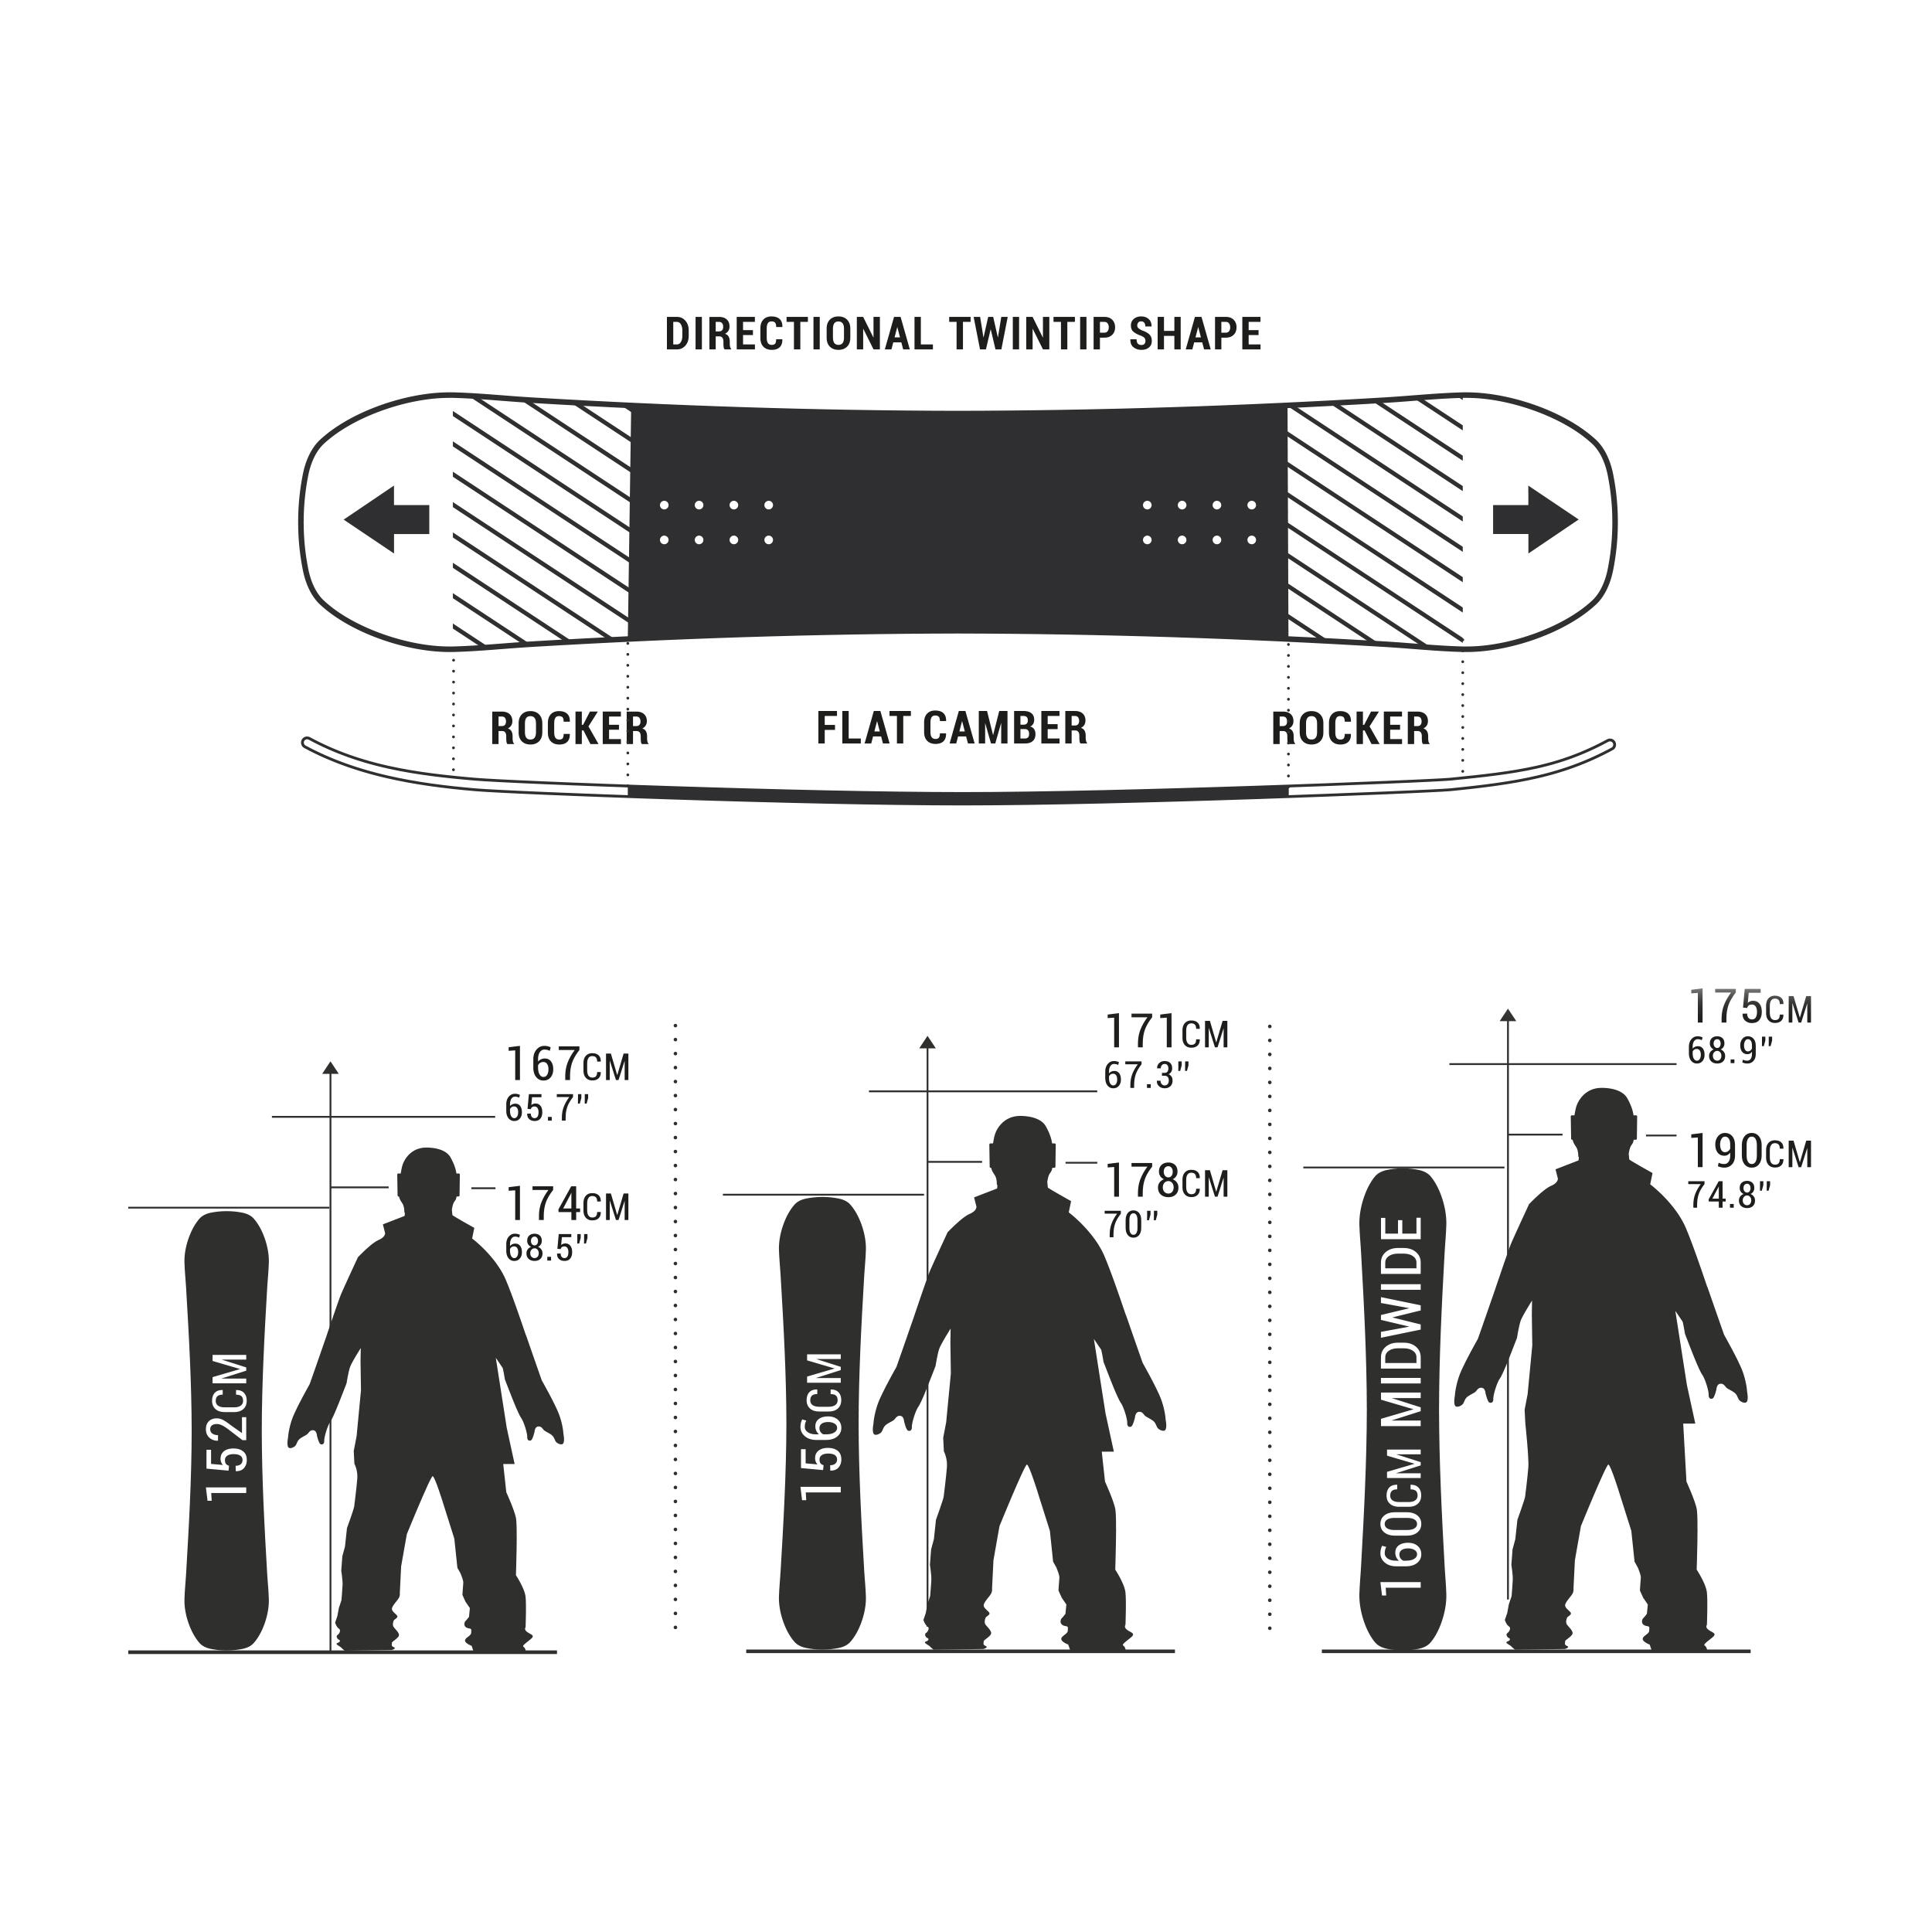 Men's Freestyle & All-Mountain Snowboard - SNB 100  - DREAMSCAPE